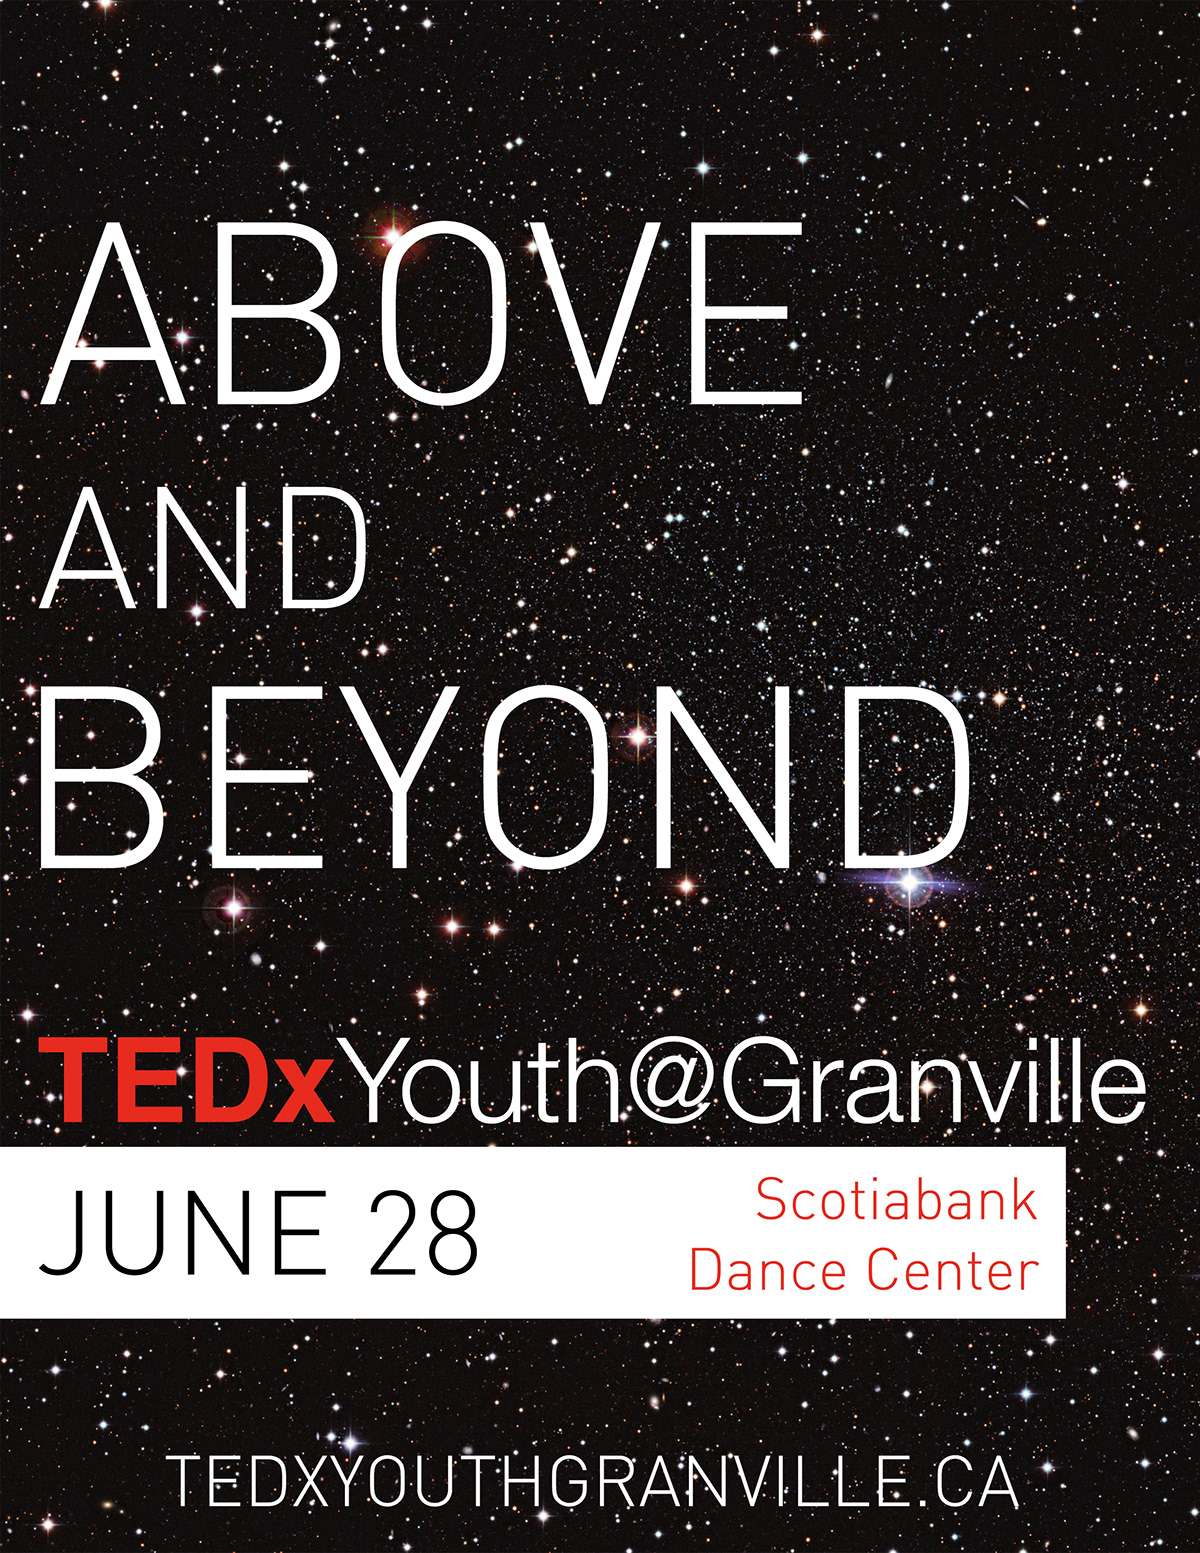 TEDx Tedxyouthgranville youth Granville TEDxYouth@Granville poster design